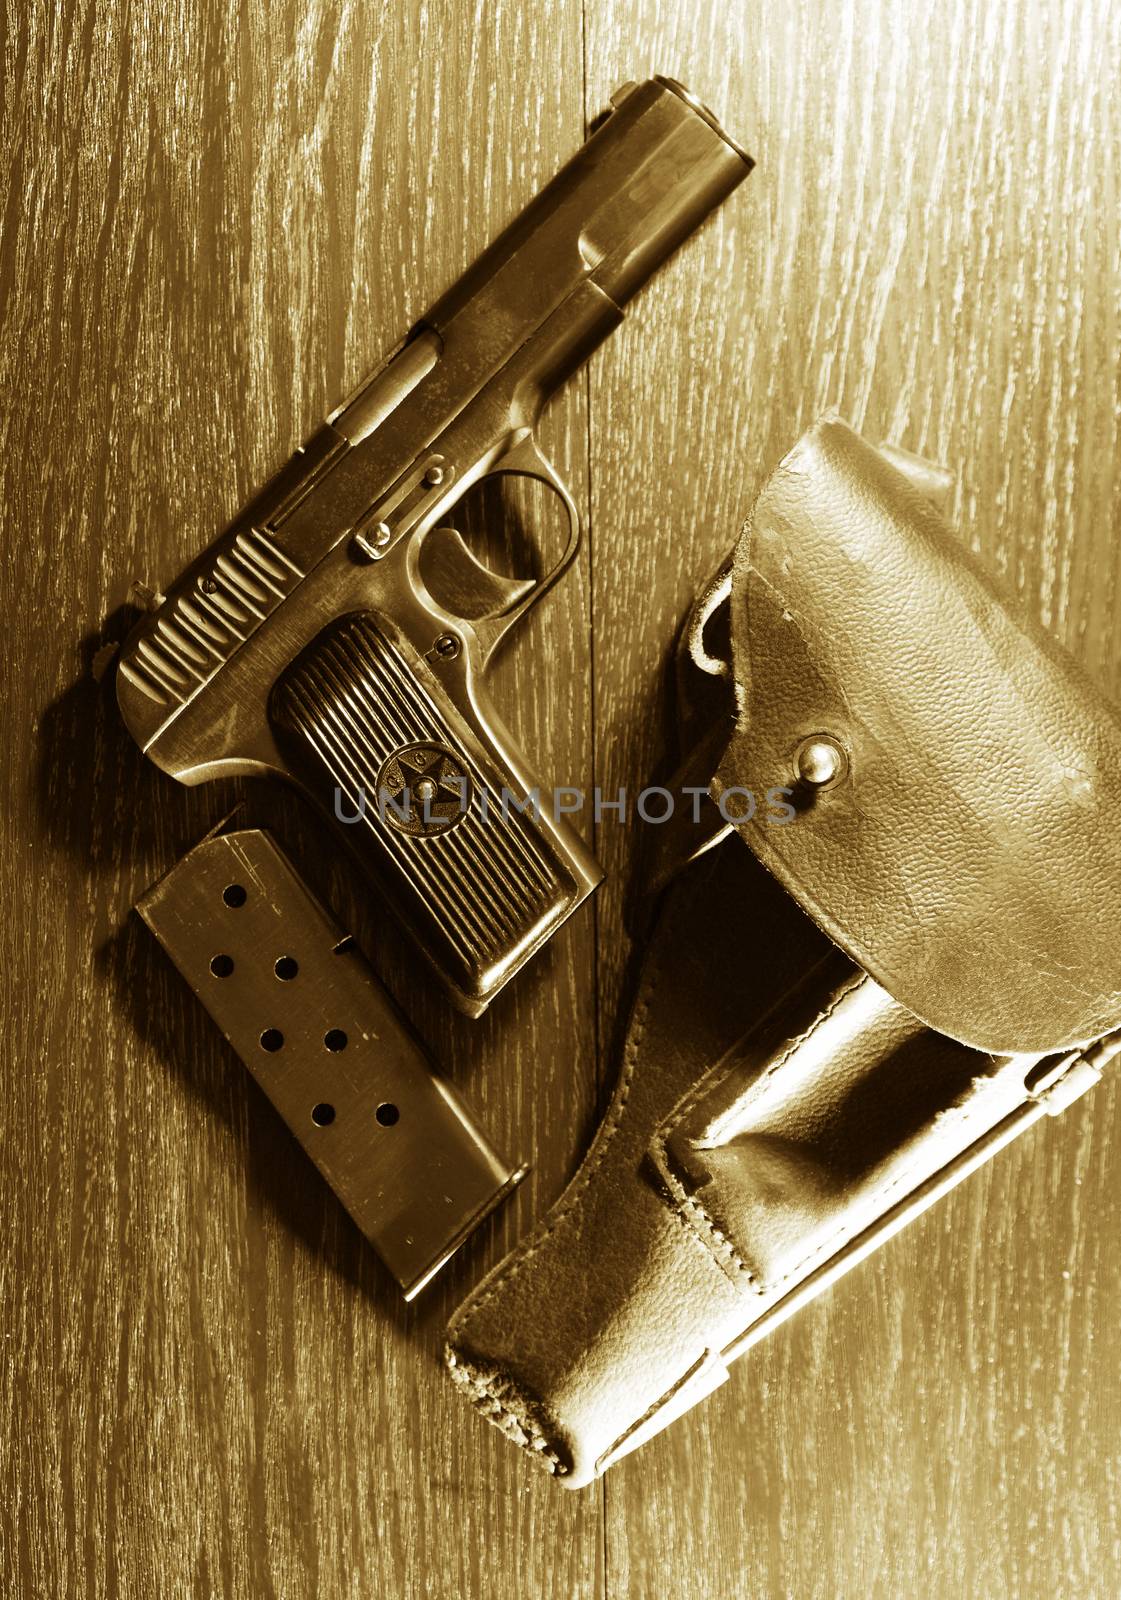 World War II Soviet equipment. Leather handgun holster and pistol